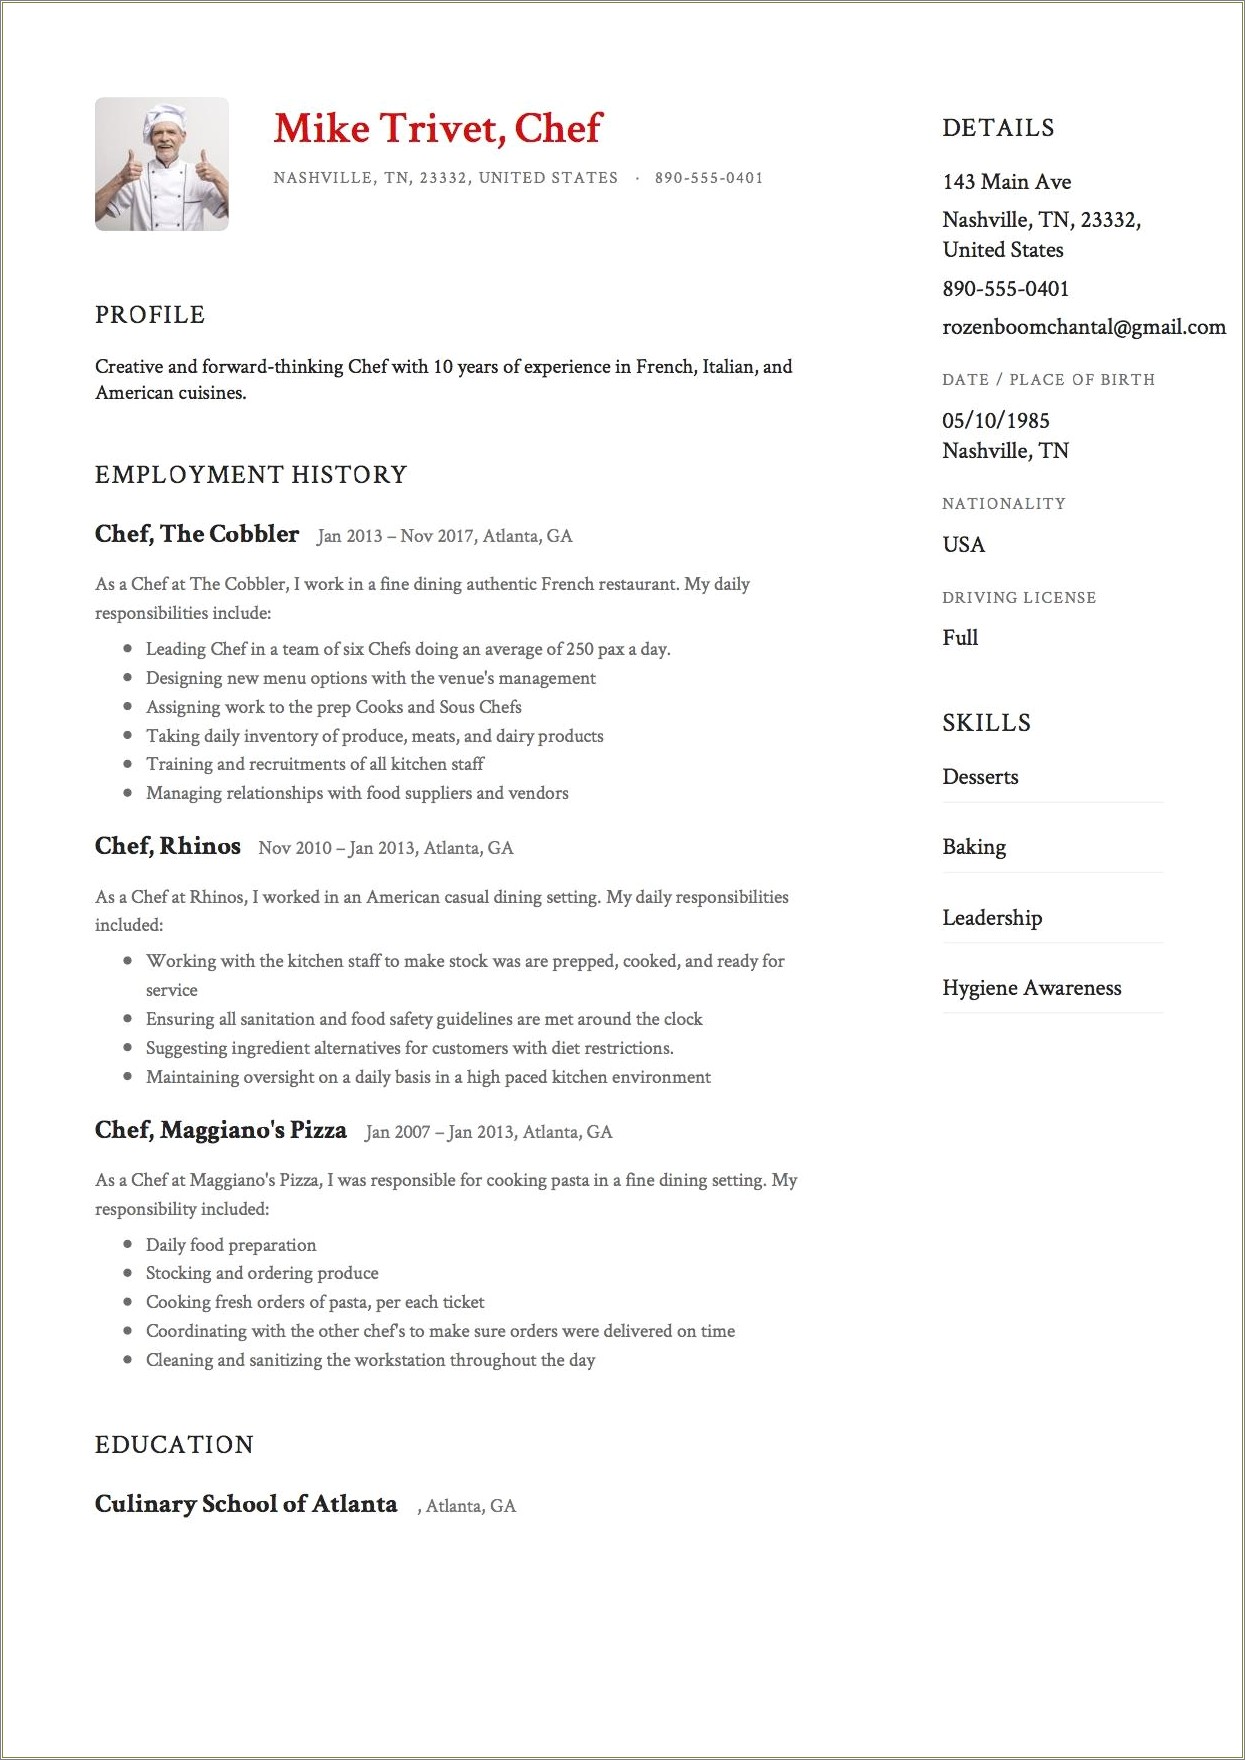 Chipotle Prep Job Description For Resume